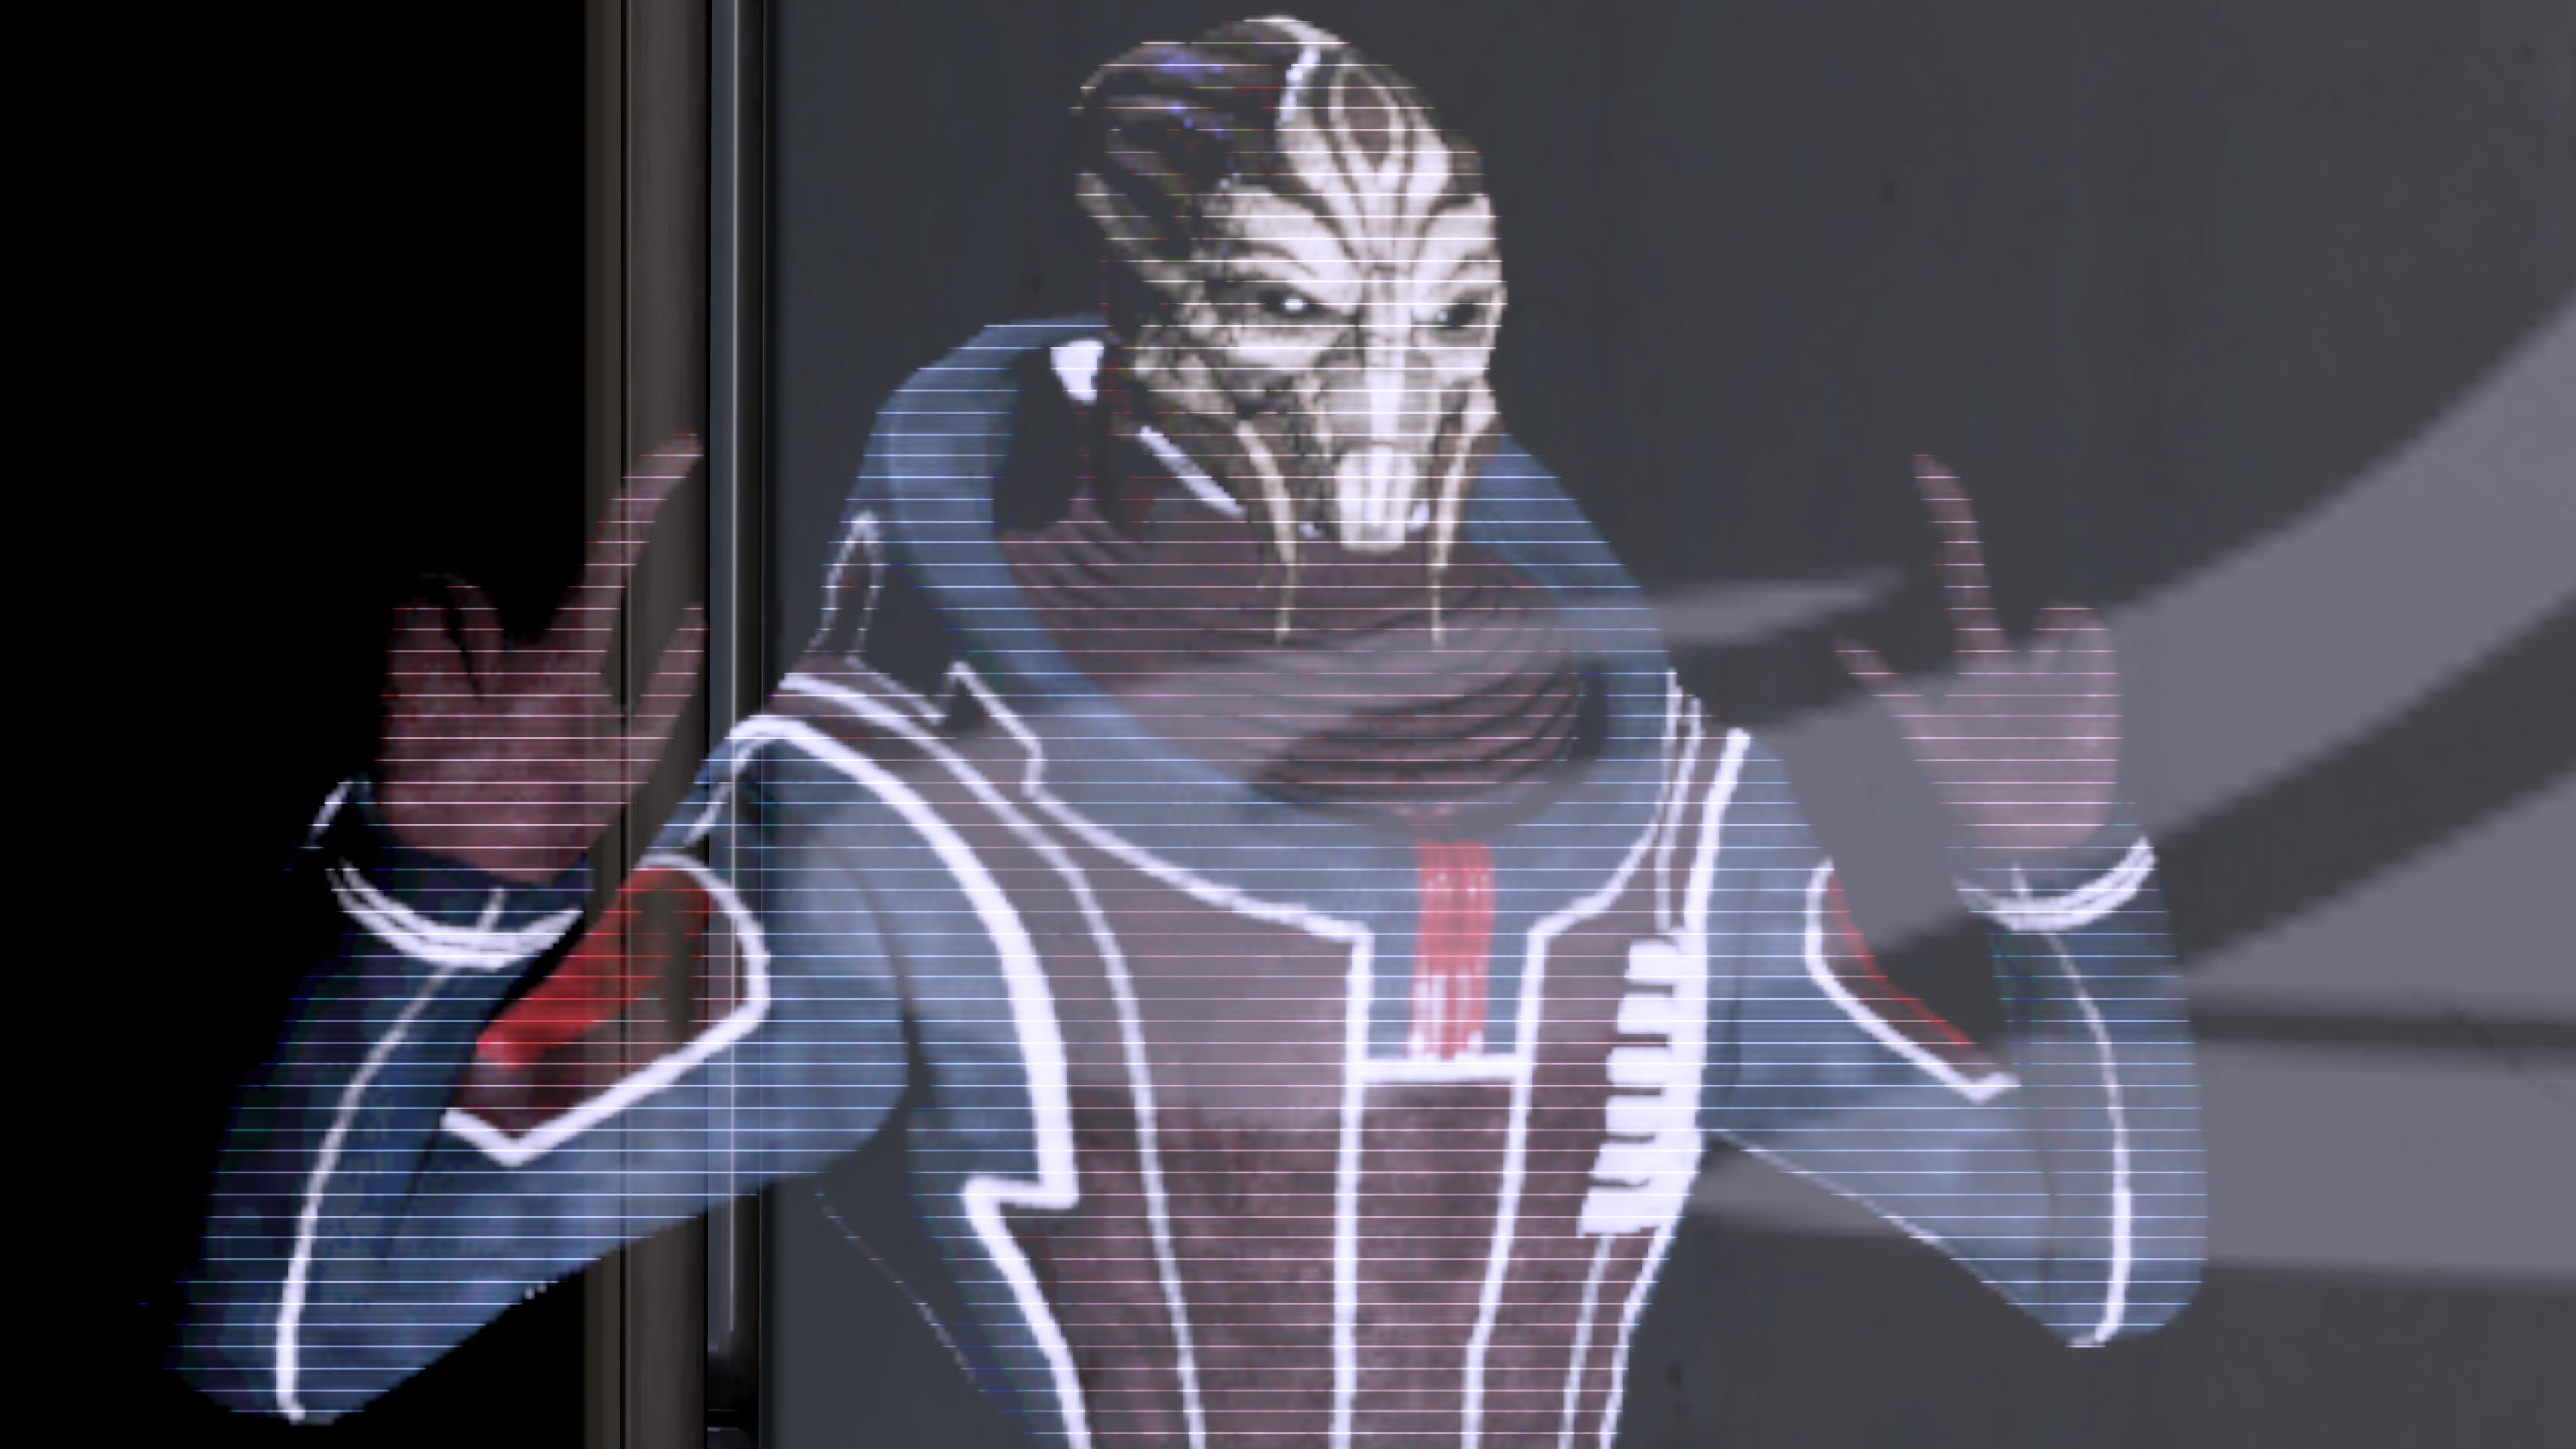 Ah yes, "Reapers" - The Mass Effect Fan Club